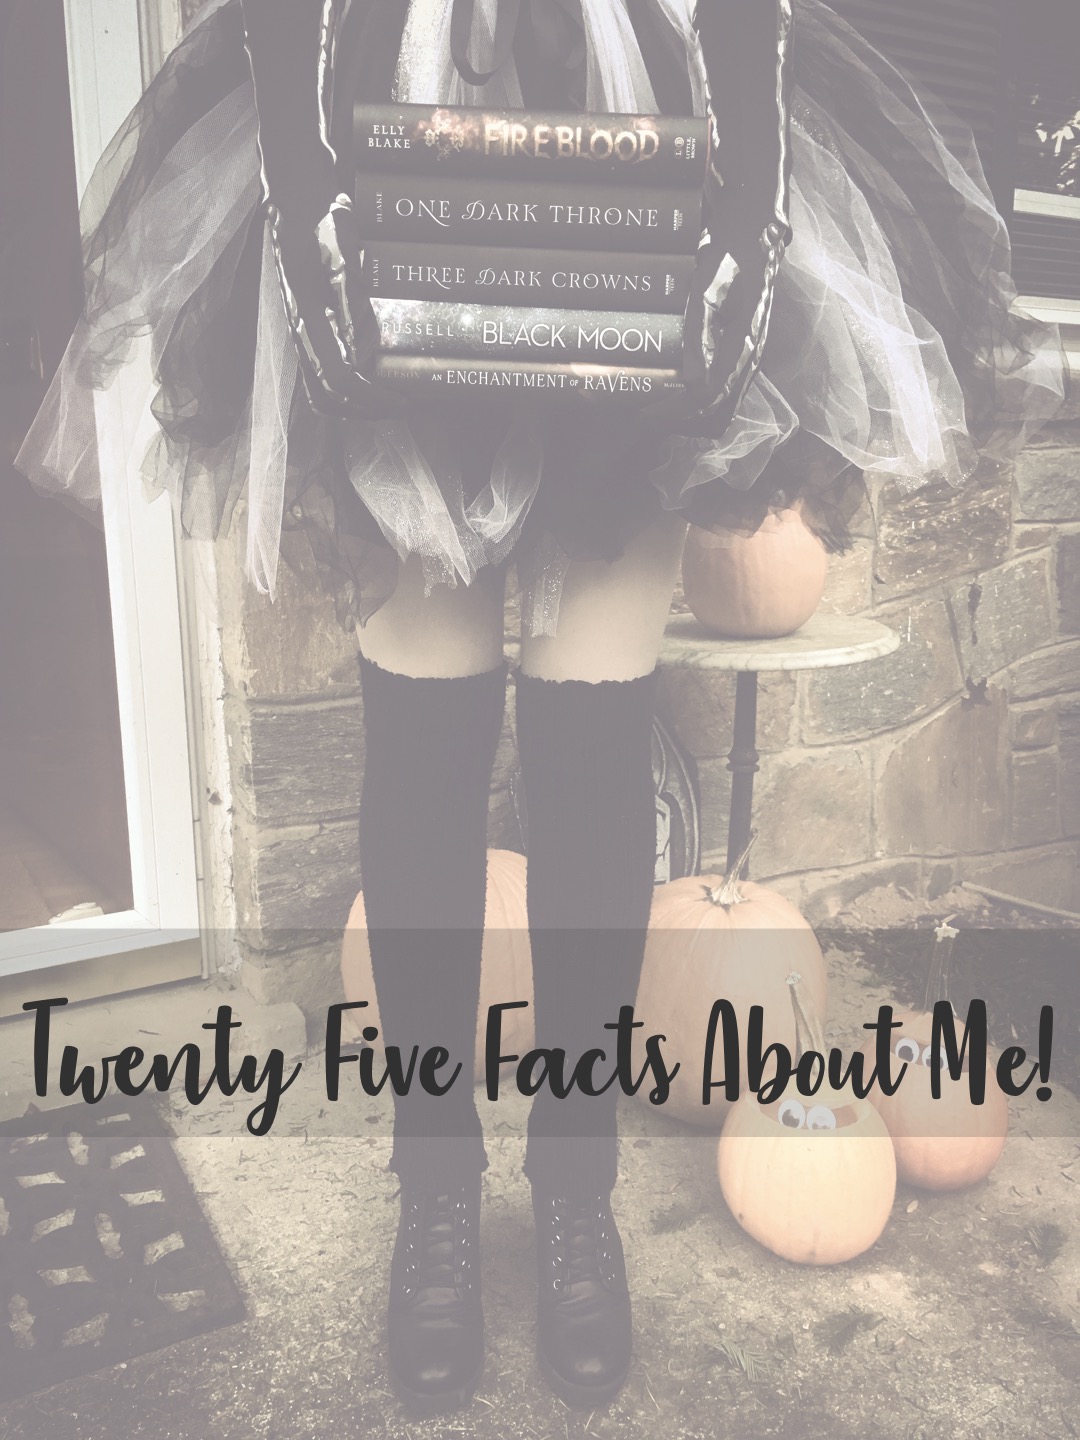 Twenty Five Facts About Me!